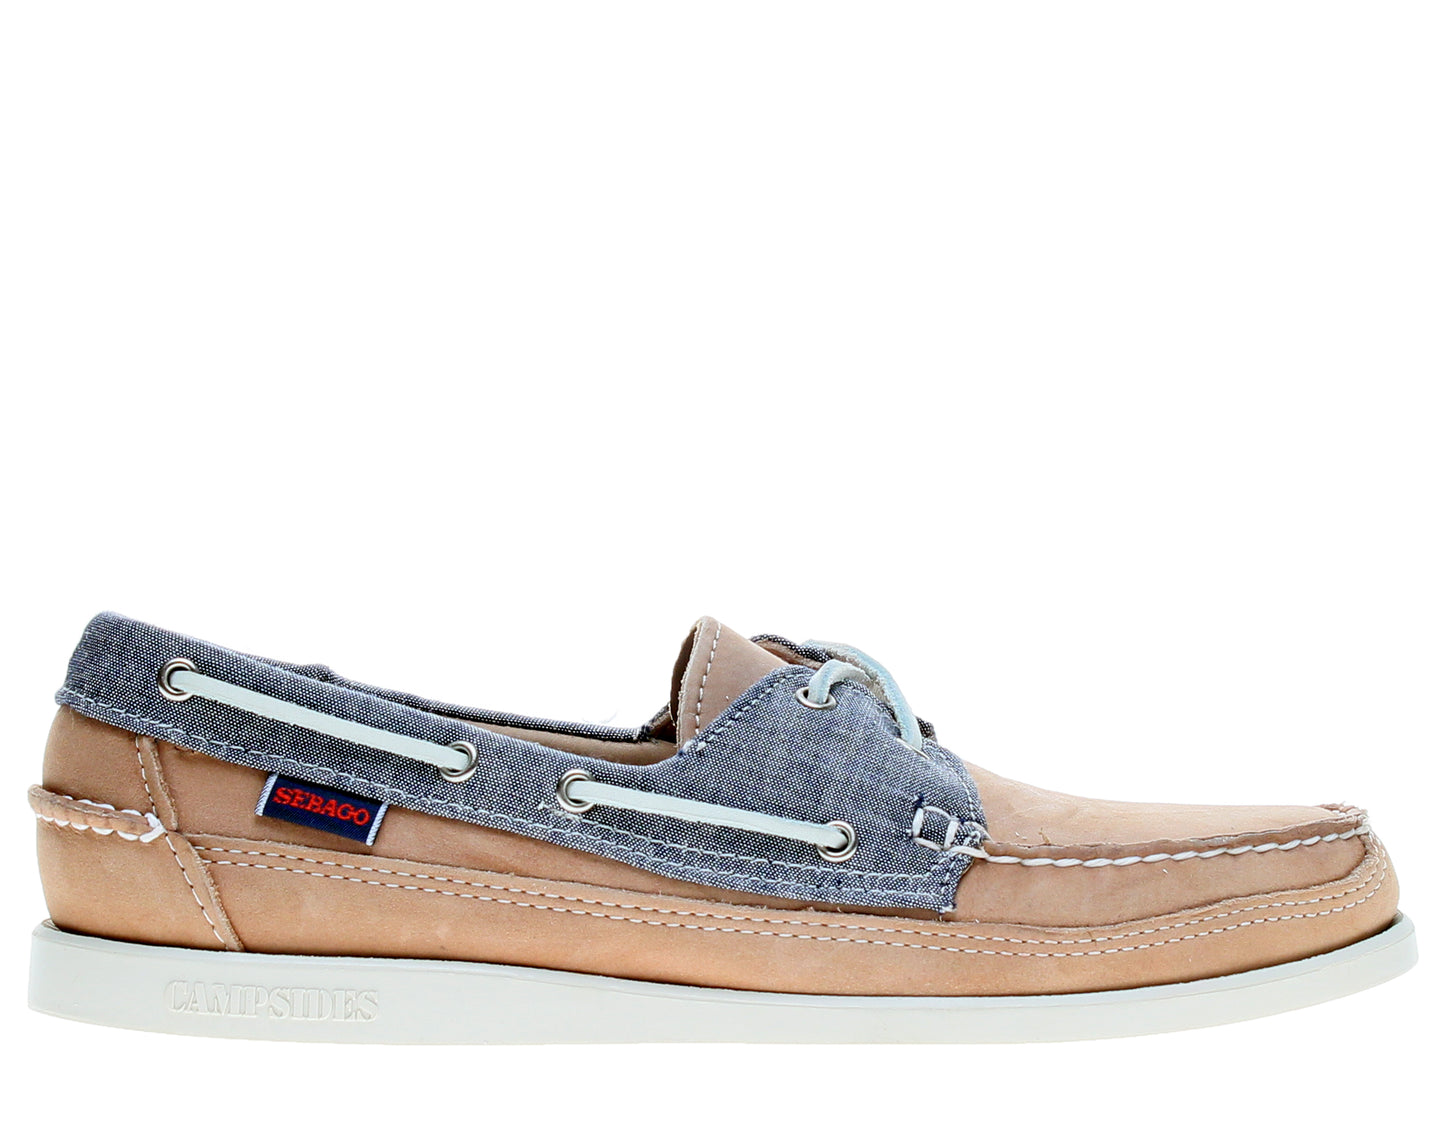 Sebago Schooner Men's Boat Shoes